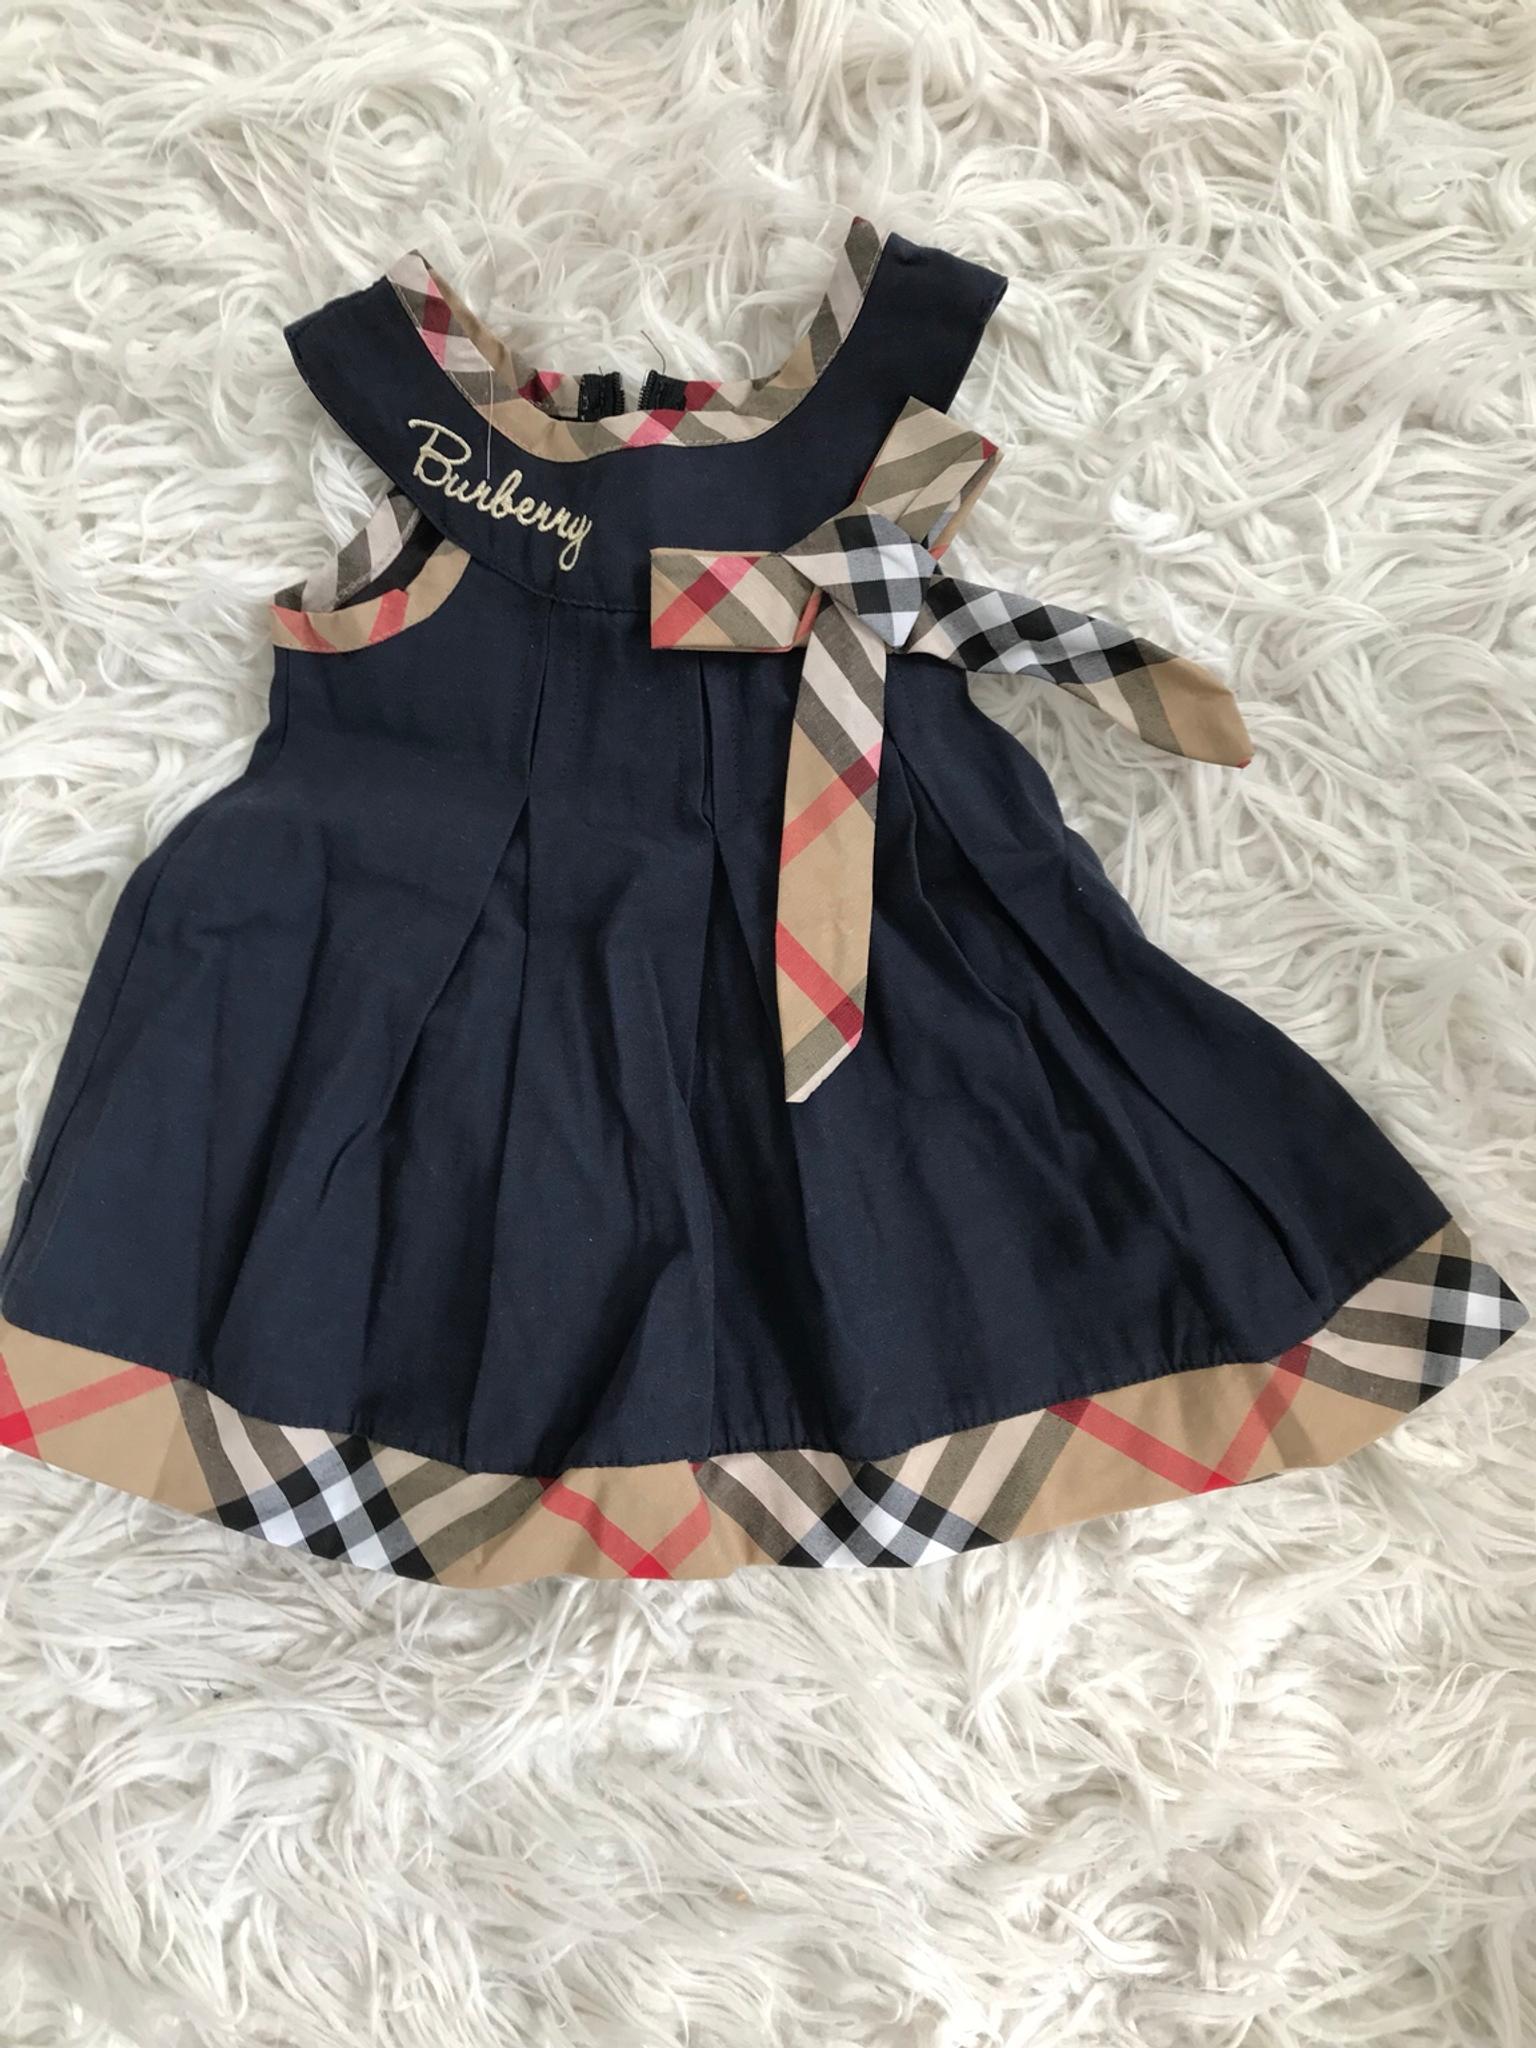 burberry infant dress